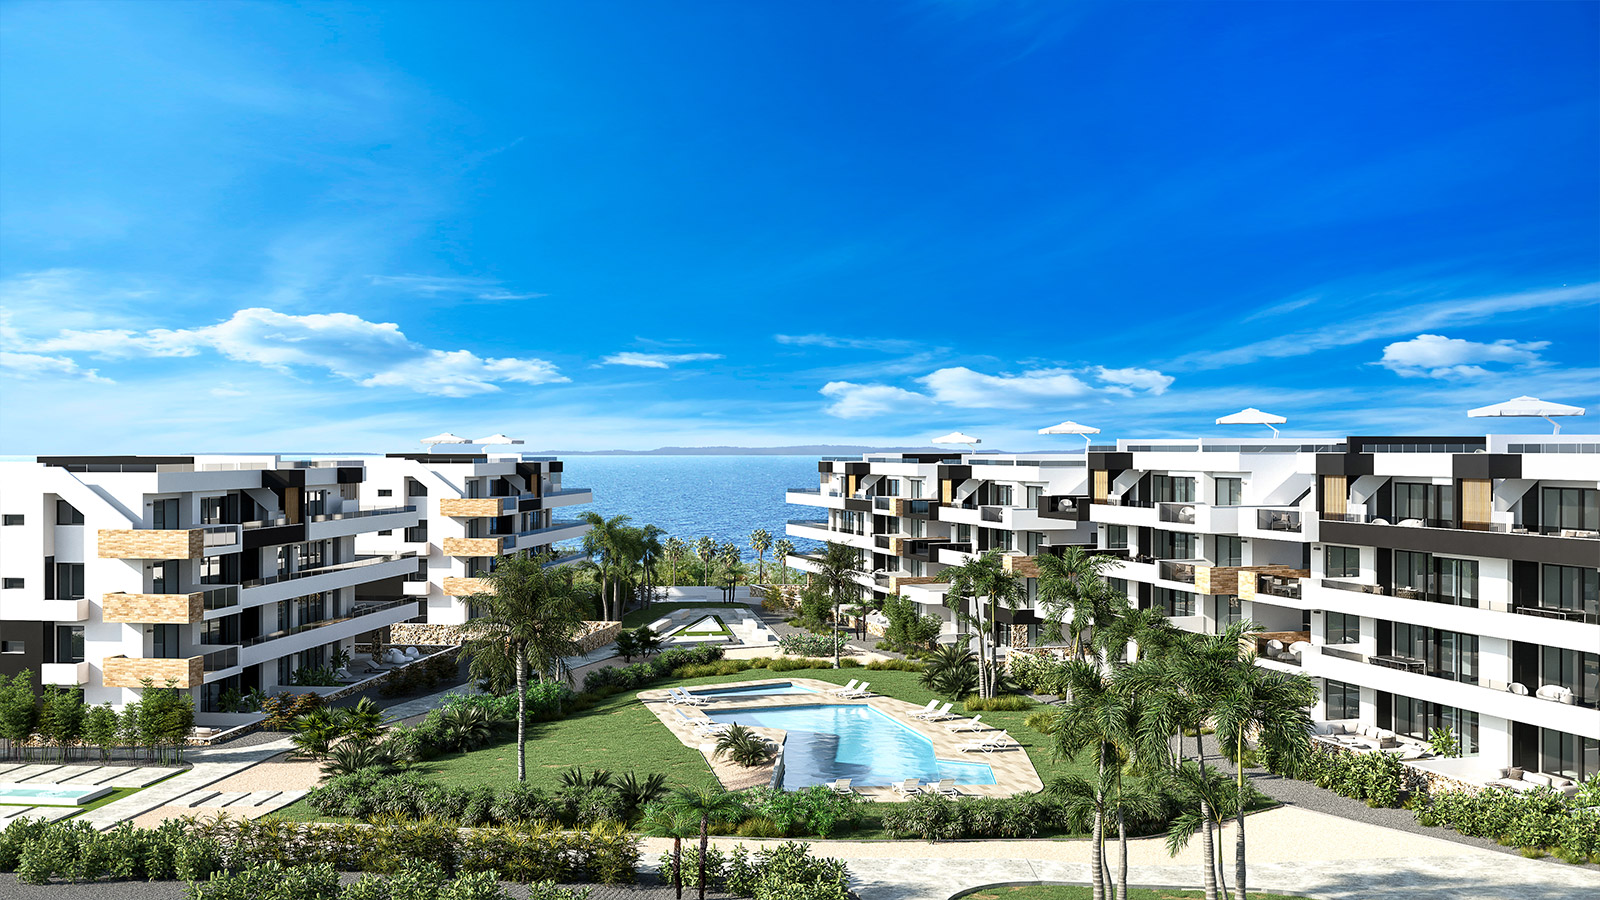 Stunning beachfront property in Costa del Sol, Spain